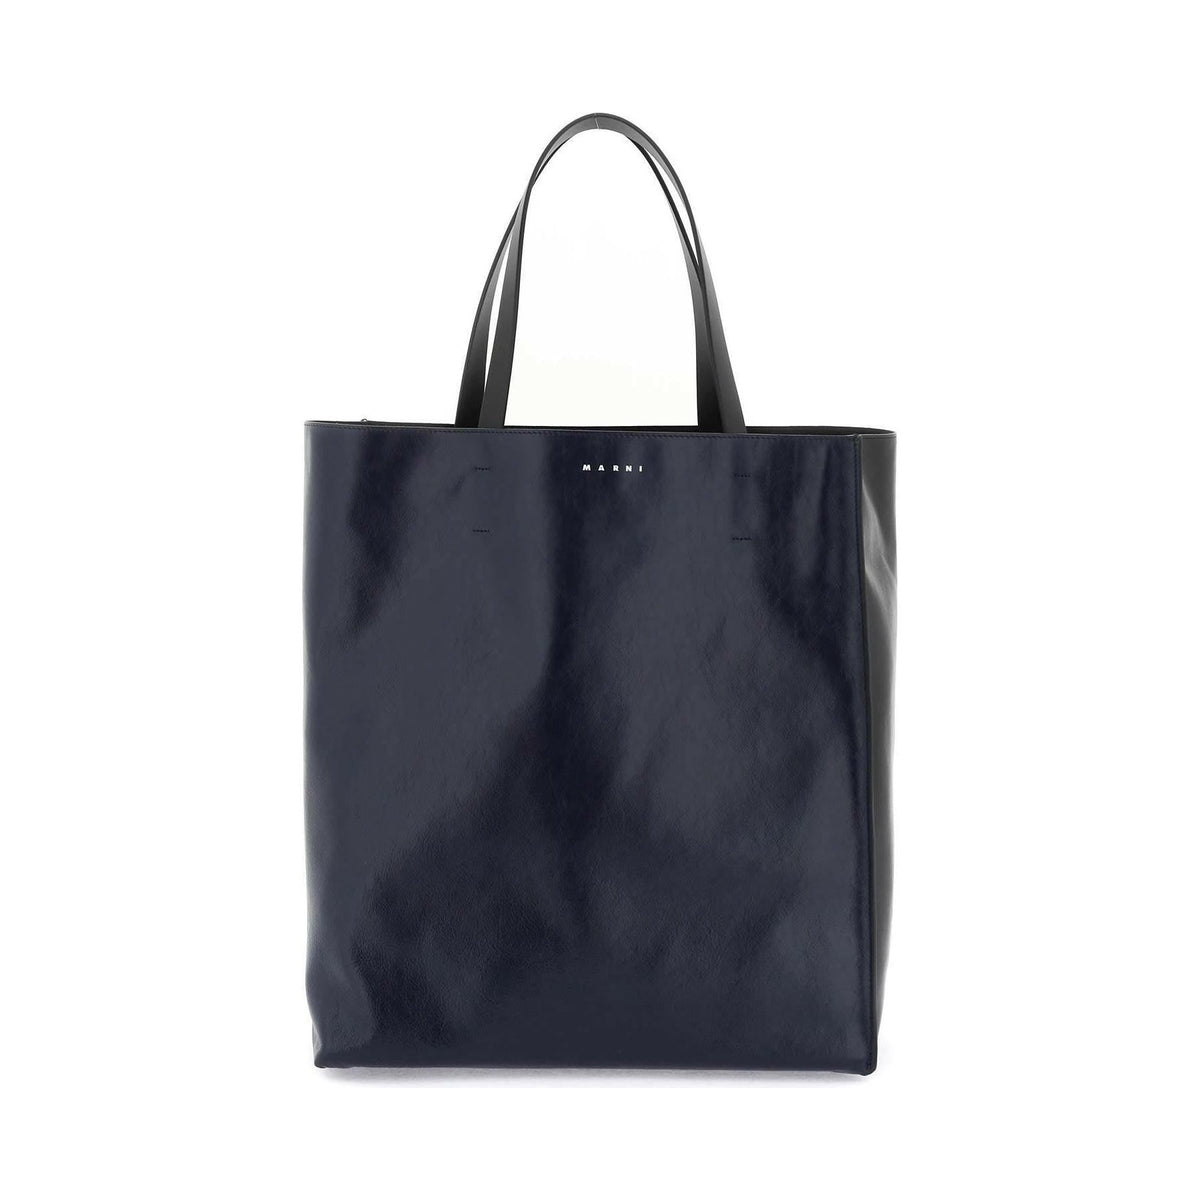 MARNI - Large Black and Blue Soft Museo Shopping Bag - JOHN JULIA